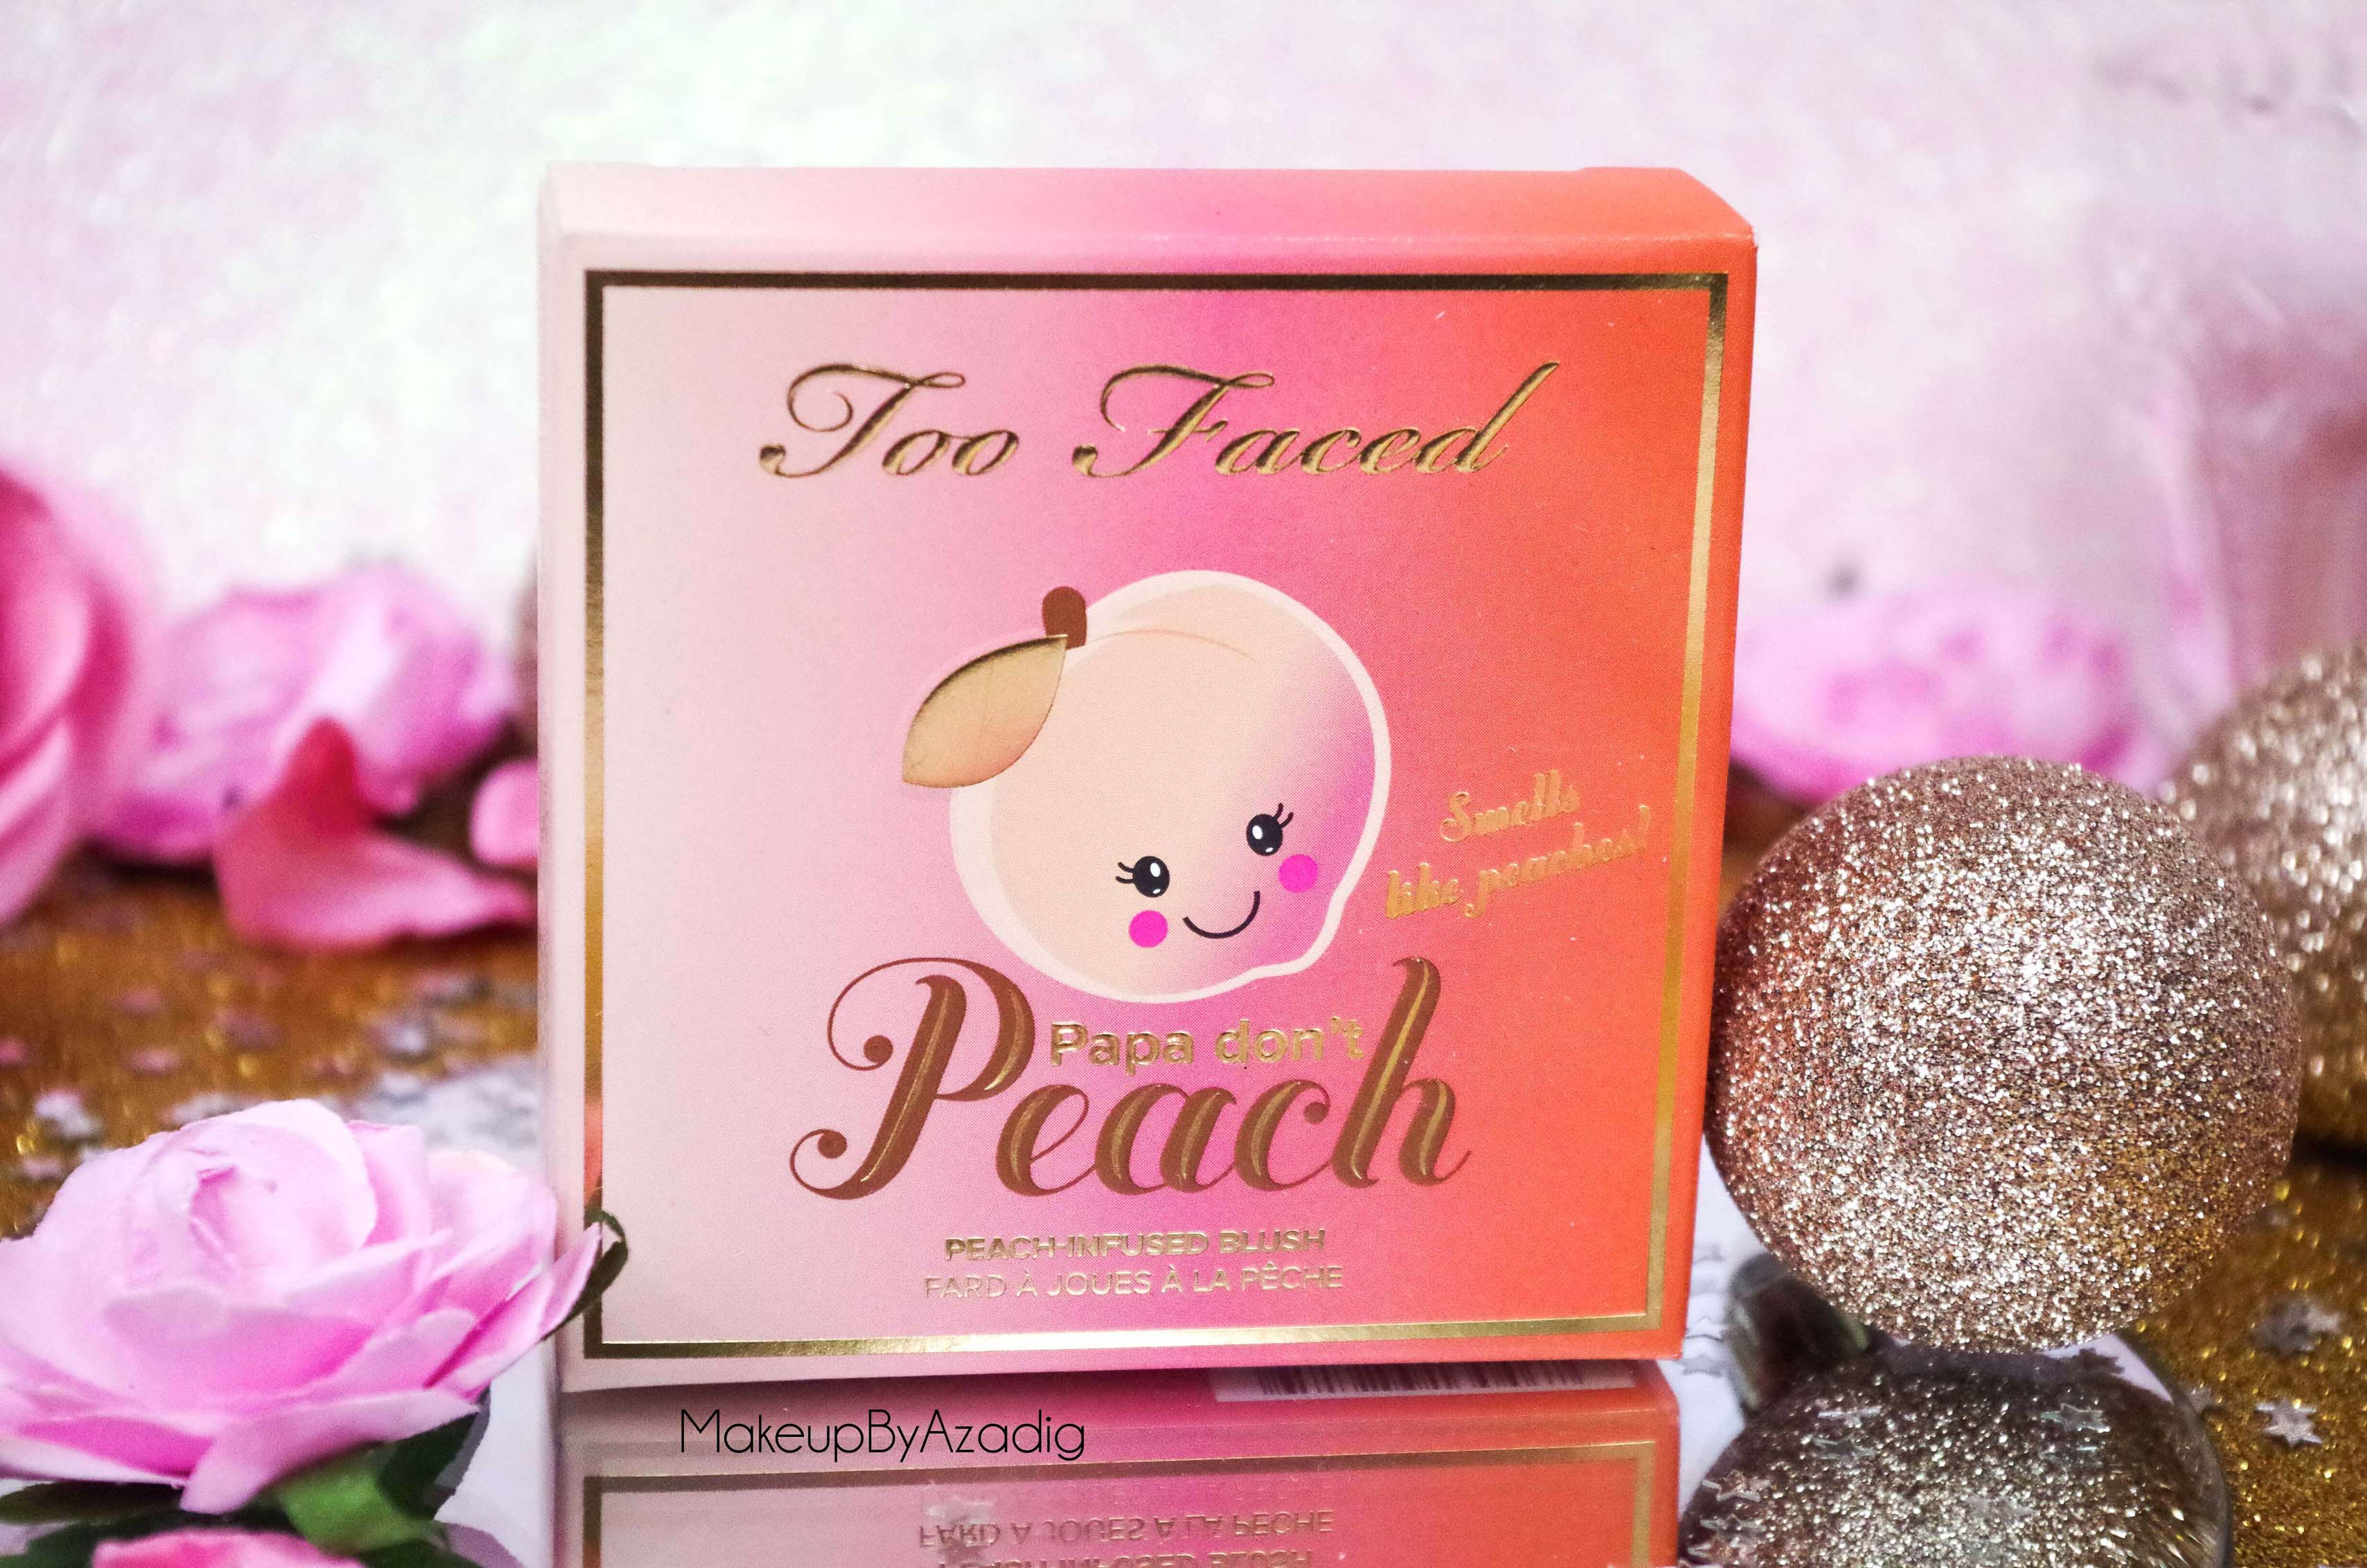 review-nouveau-blush-papa-dont-peach-too-faced-sephora-ete-printemps-paris-sweet-peach-swatch-avis-makeupbyazadig-love-2